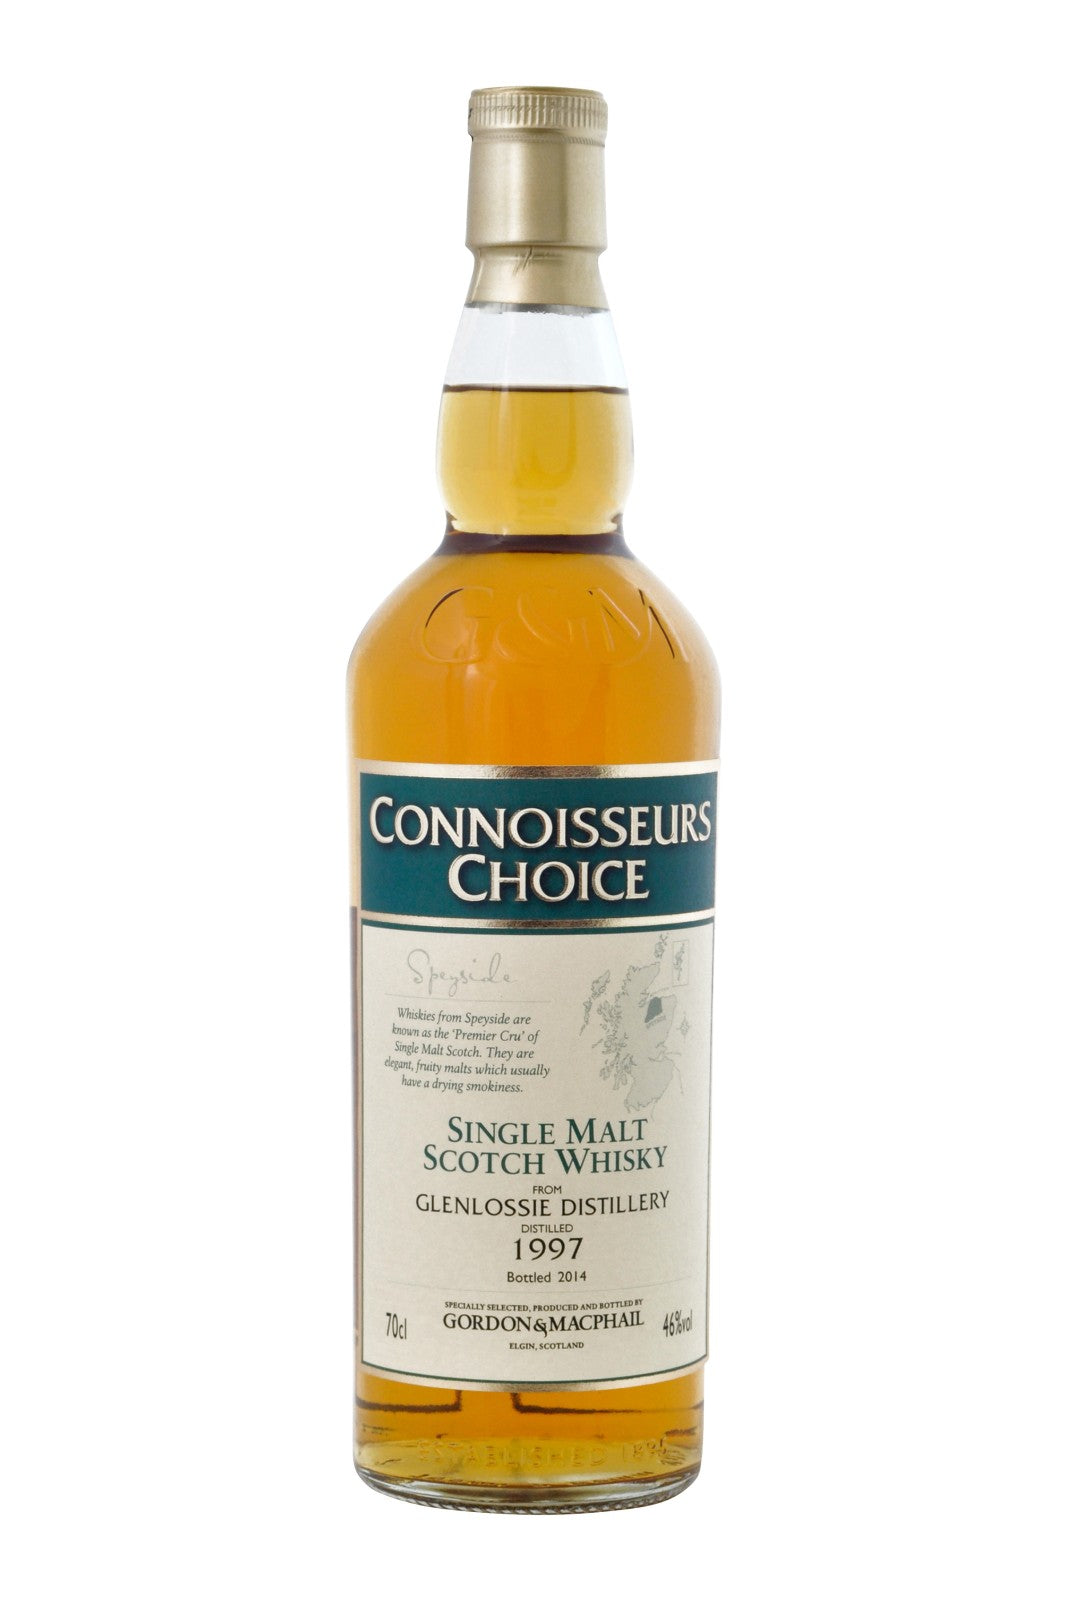 Glenlossie 1997 Gordon & MacPhail's Connoisseurs Choice